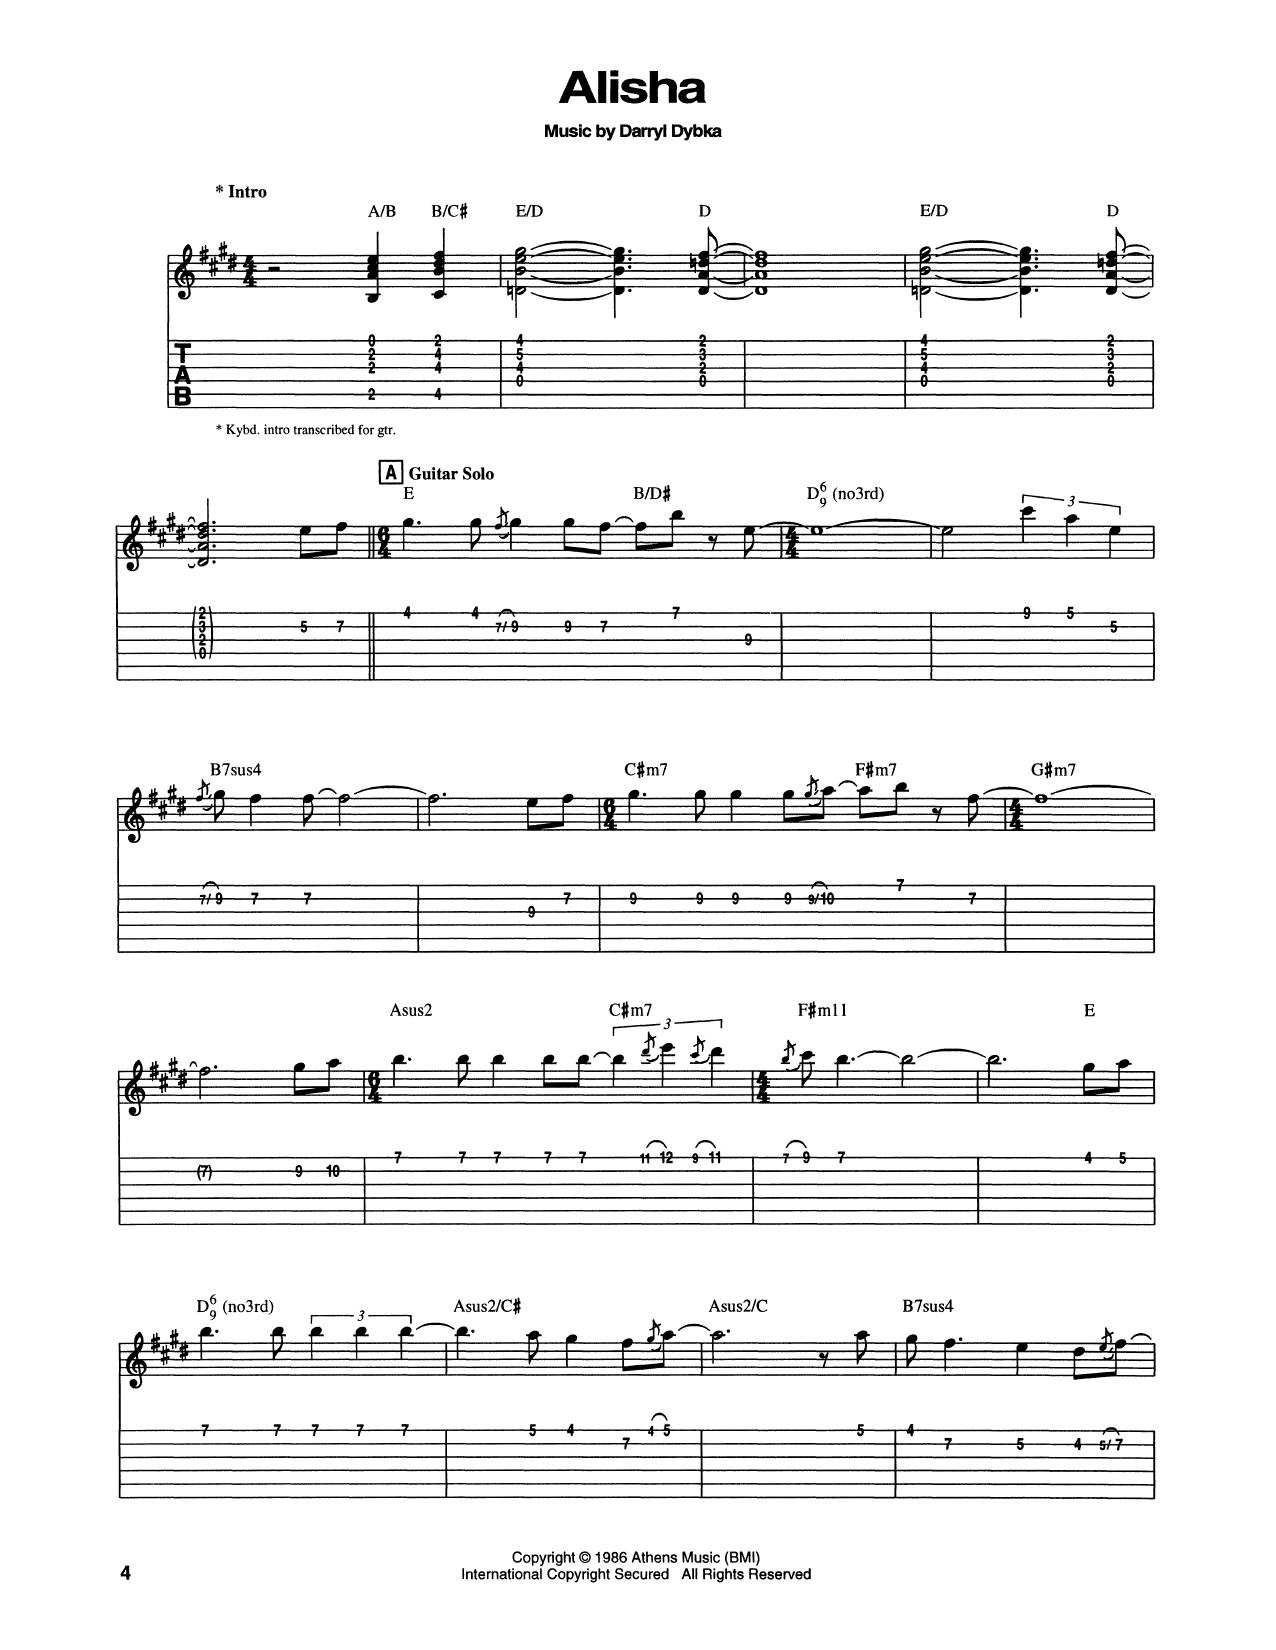 Chet Atkins Alisha Sheet Music Notes & Chords for Guitar Tab - Download or Print PDF